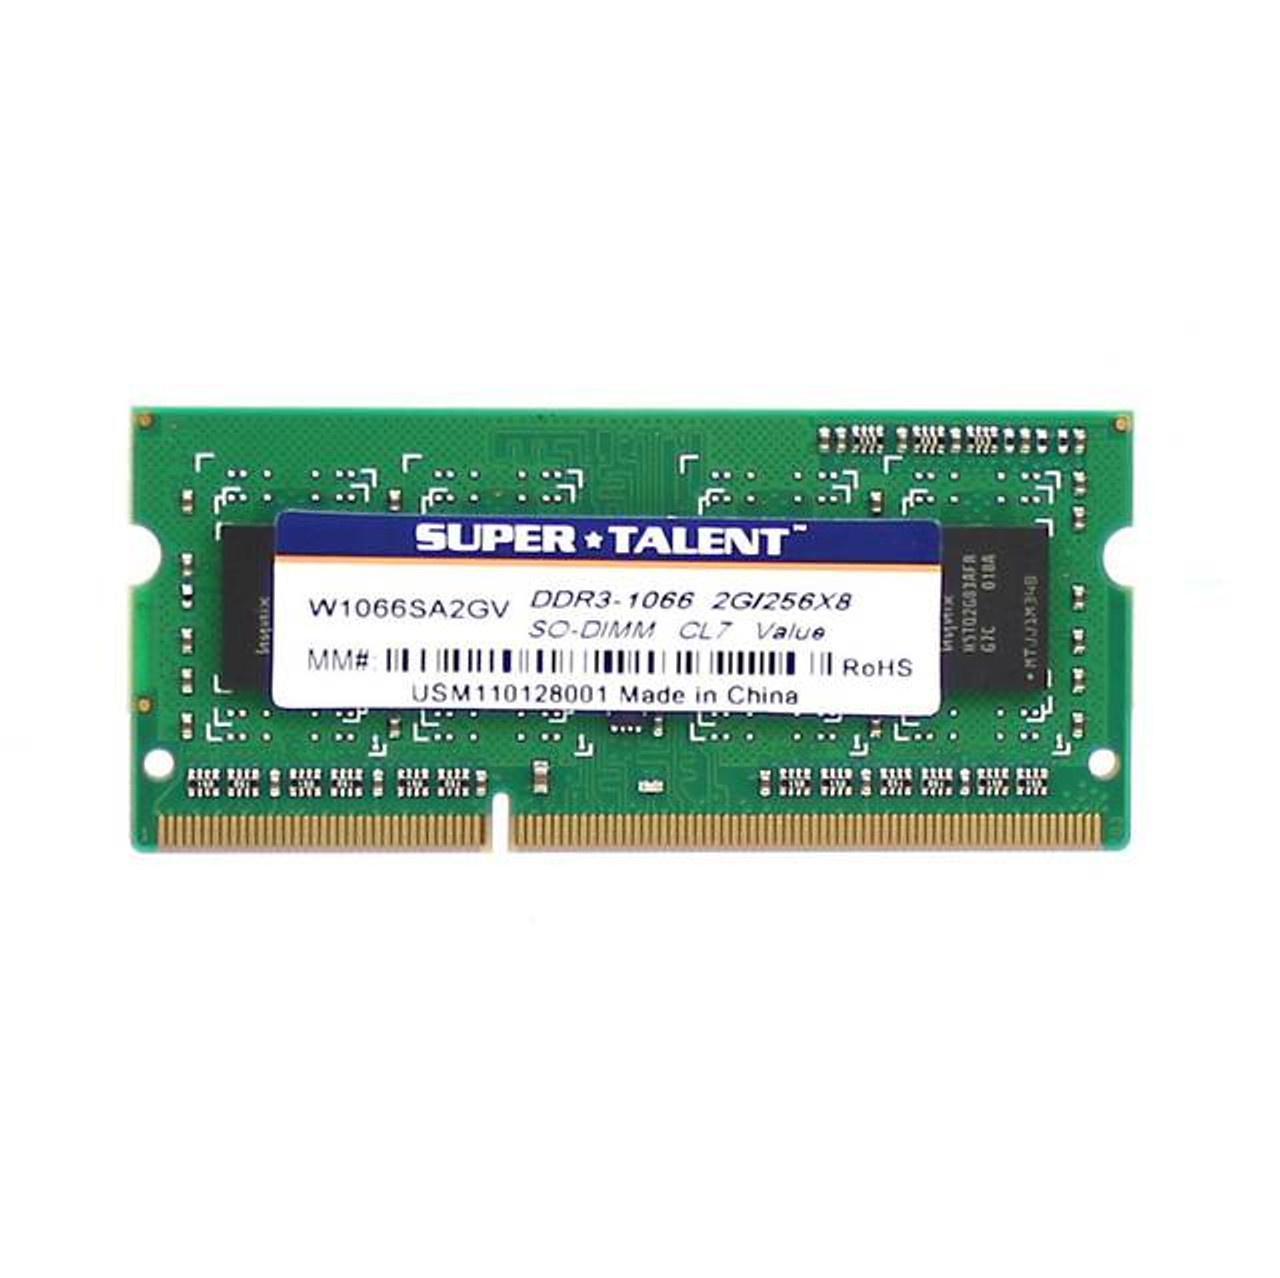 Super Talent DDR3-1066 SODIMM 2GB/256x8 Notebook Memory